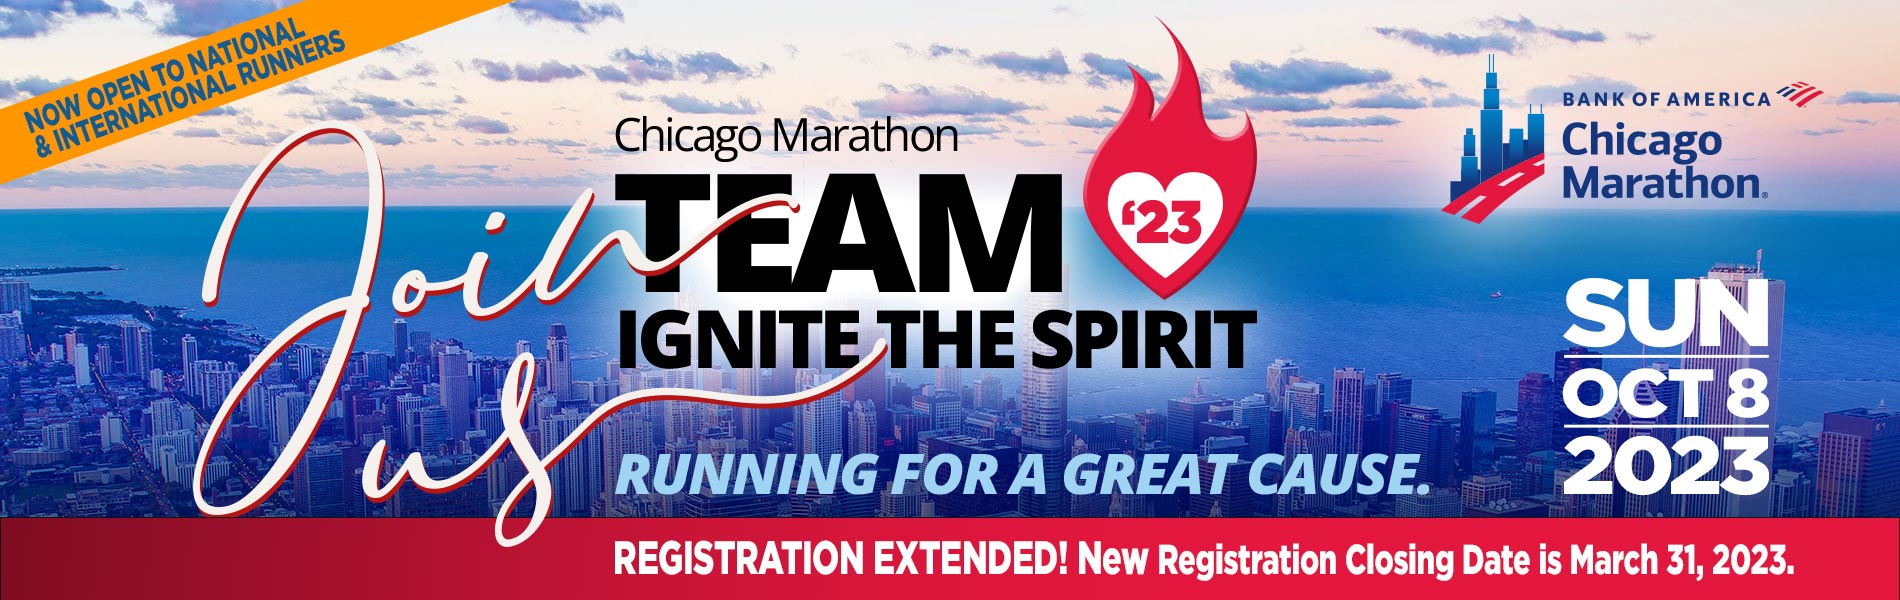 Chicago Marathon Team 2023